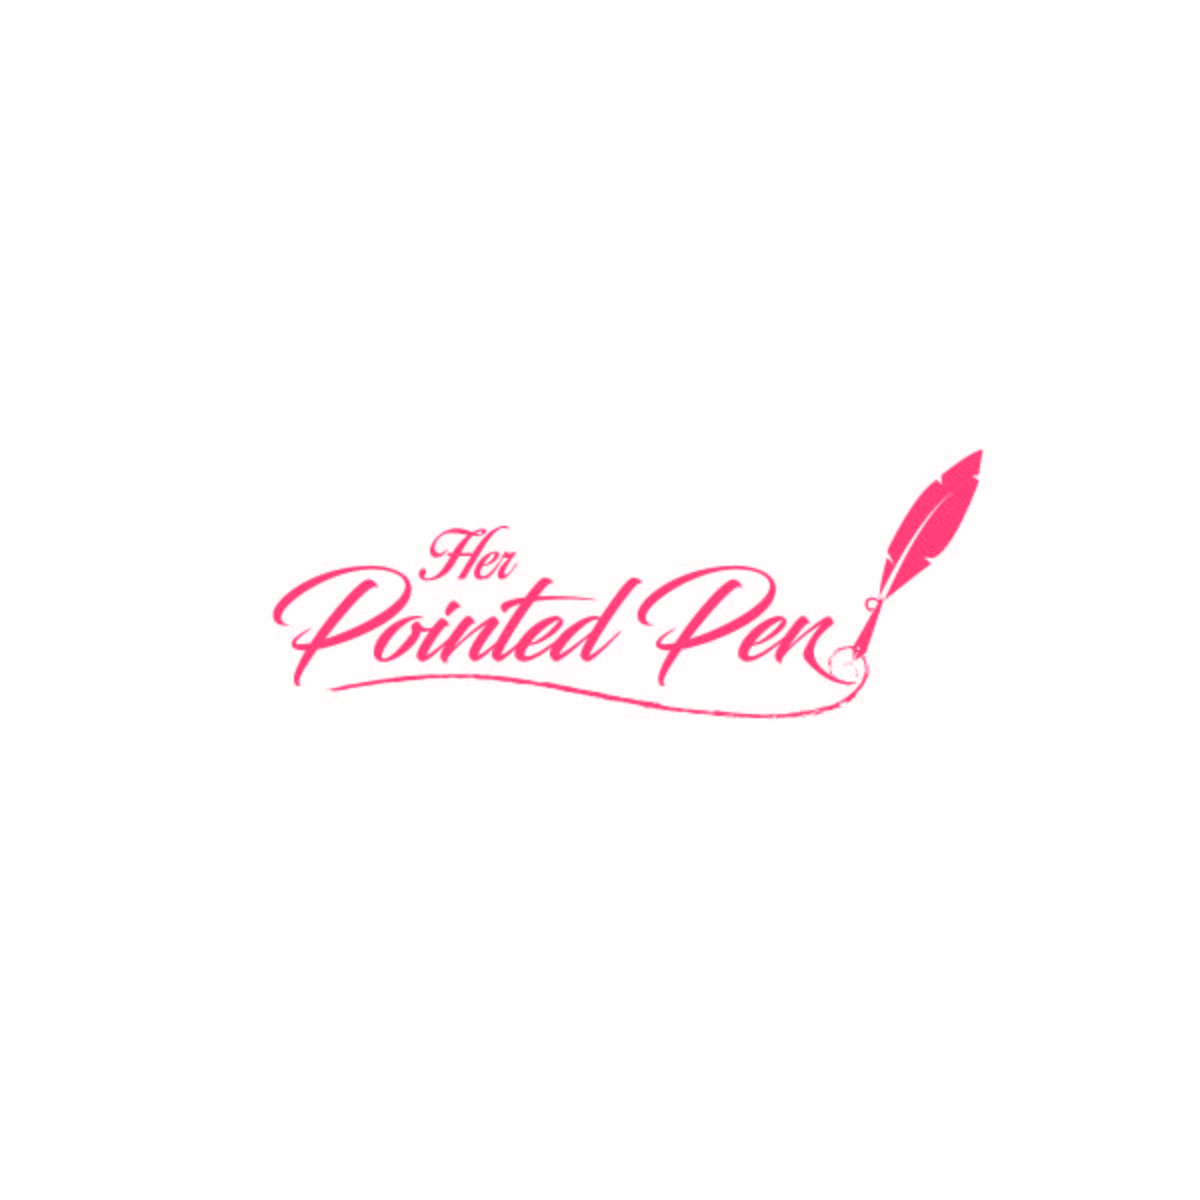 Red Pointed Logo - Elegant, Professional, Boutique Logo Design for Her Pointed Pen